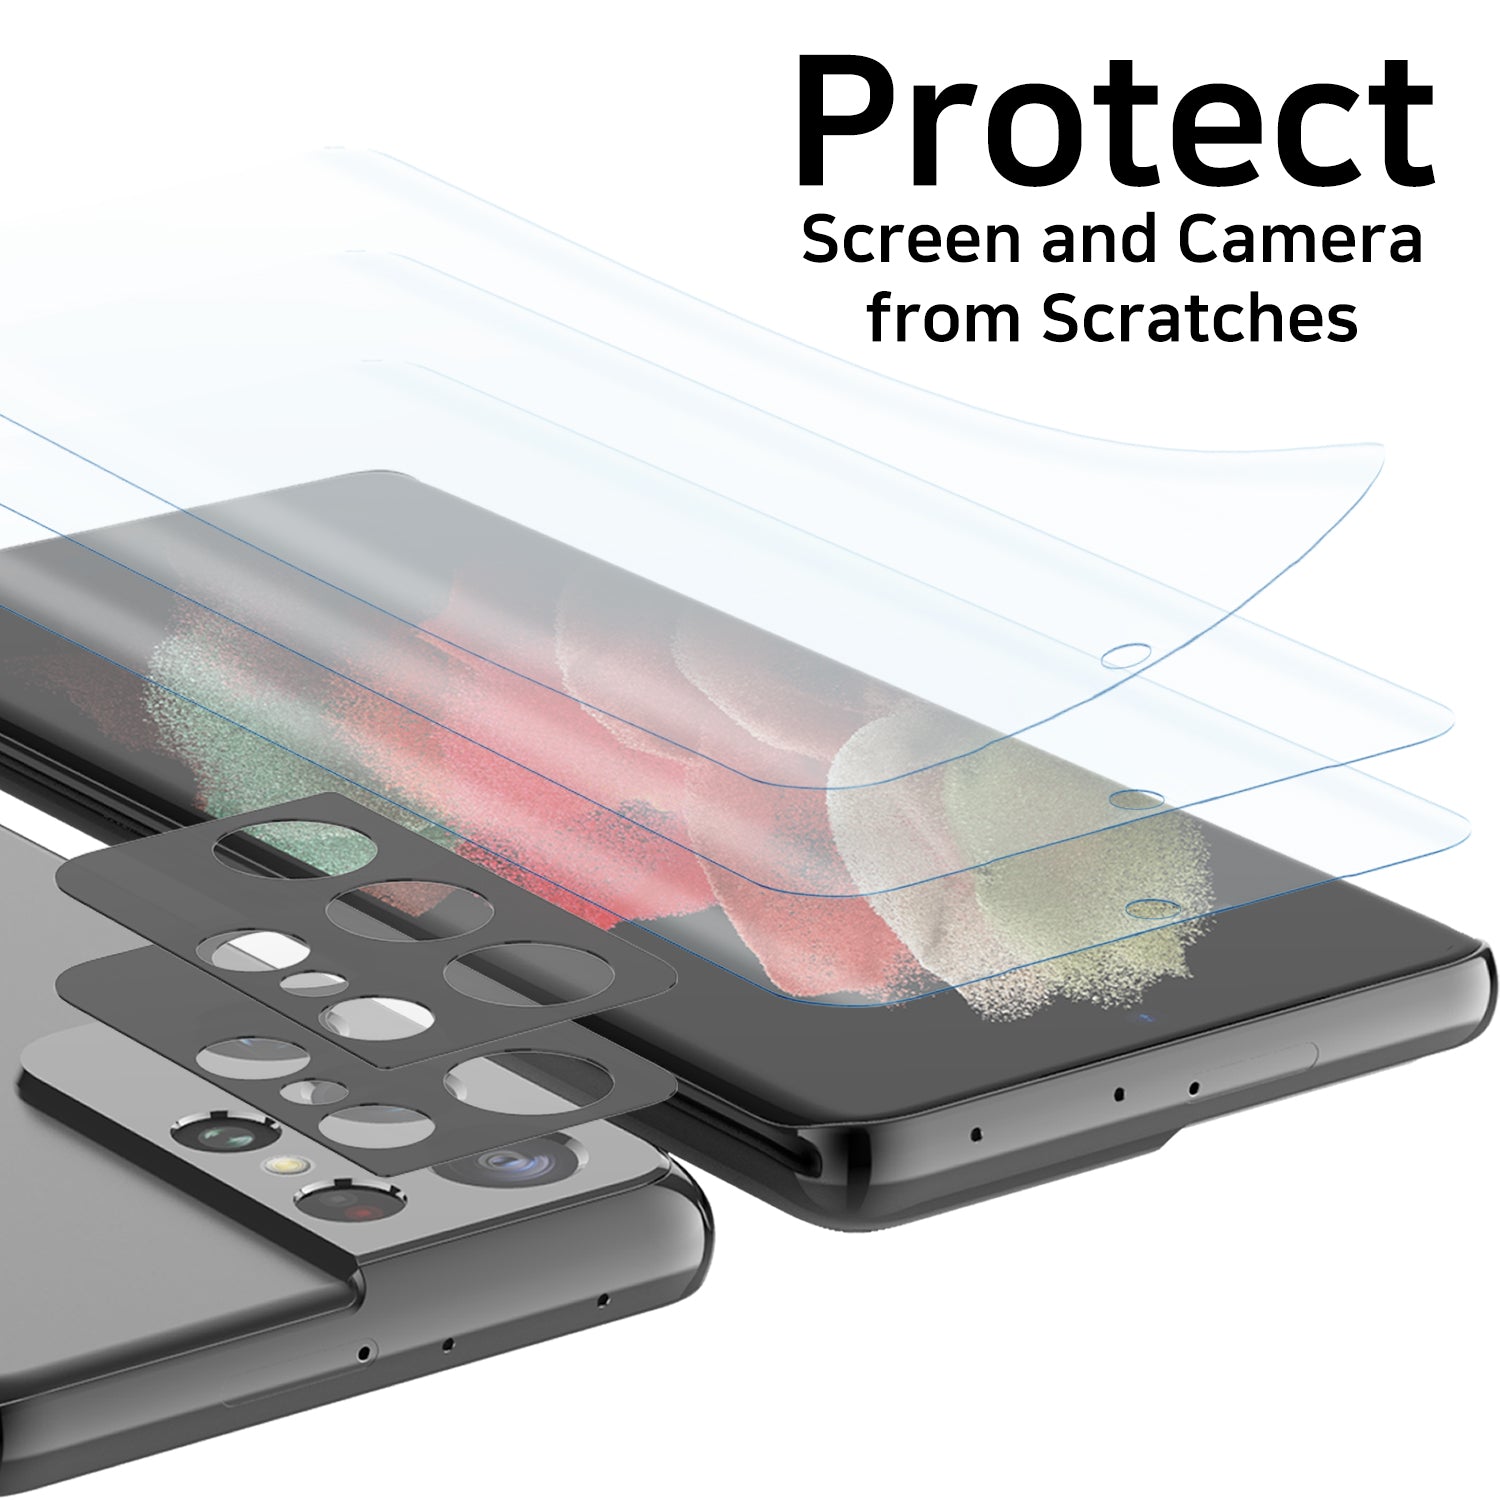 Samsung Galaxy S21 Plus Screen Protector Tempered Glass Whitestone –  Whitestonedome